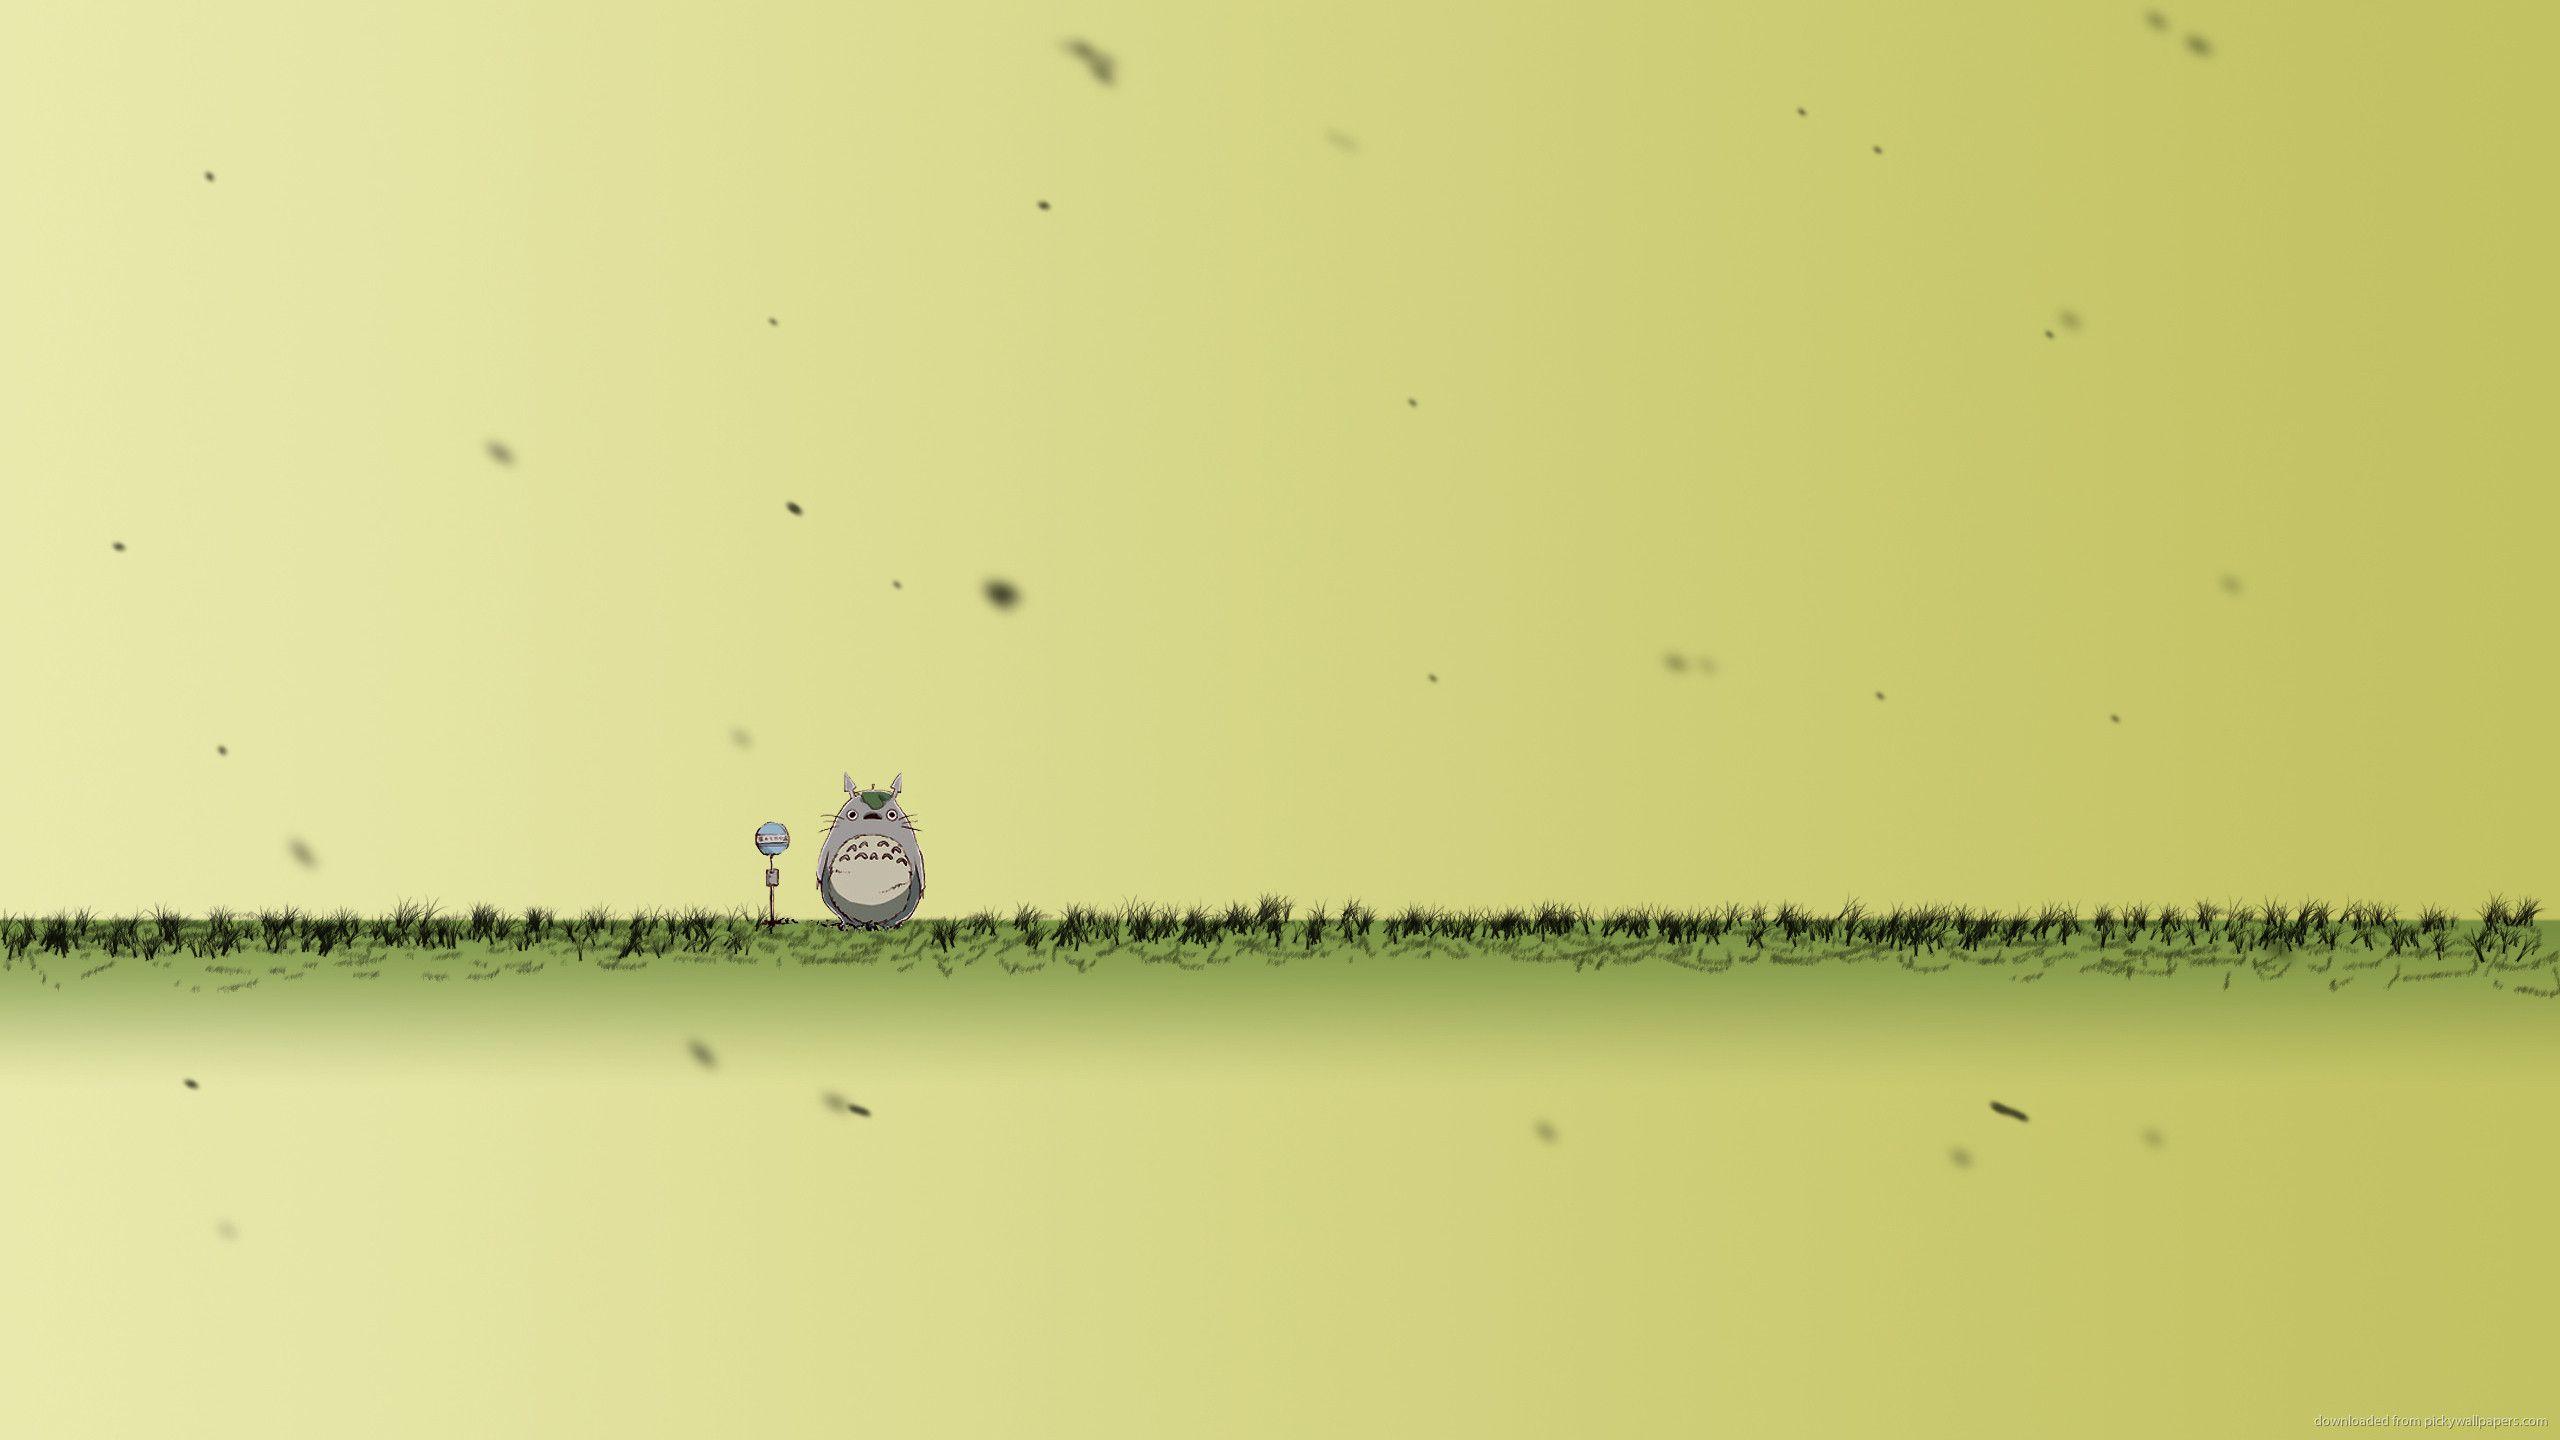 Totoro wallpaper